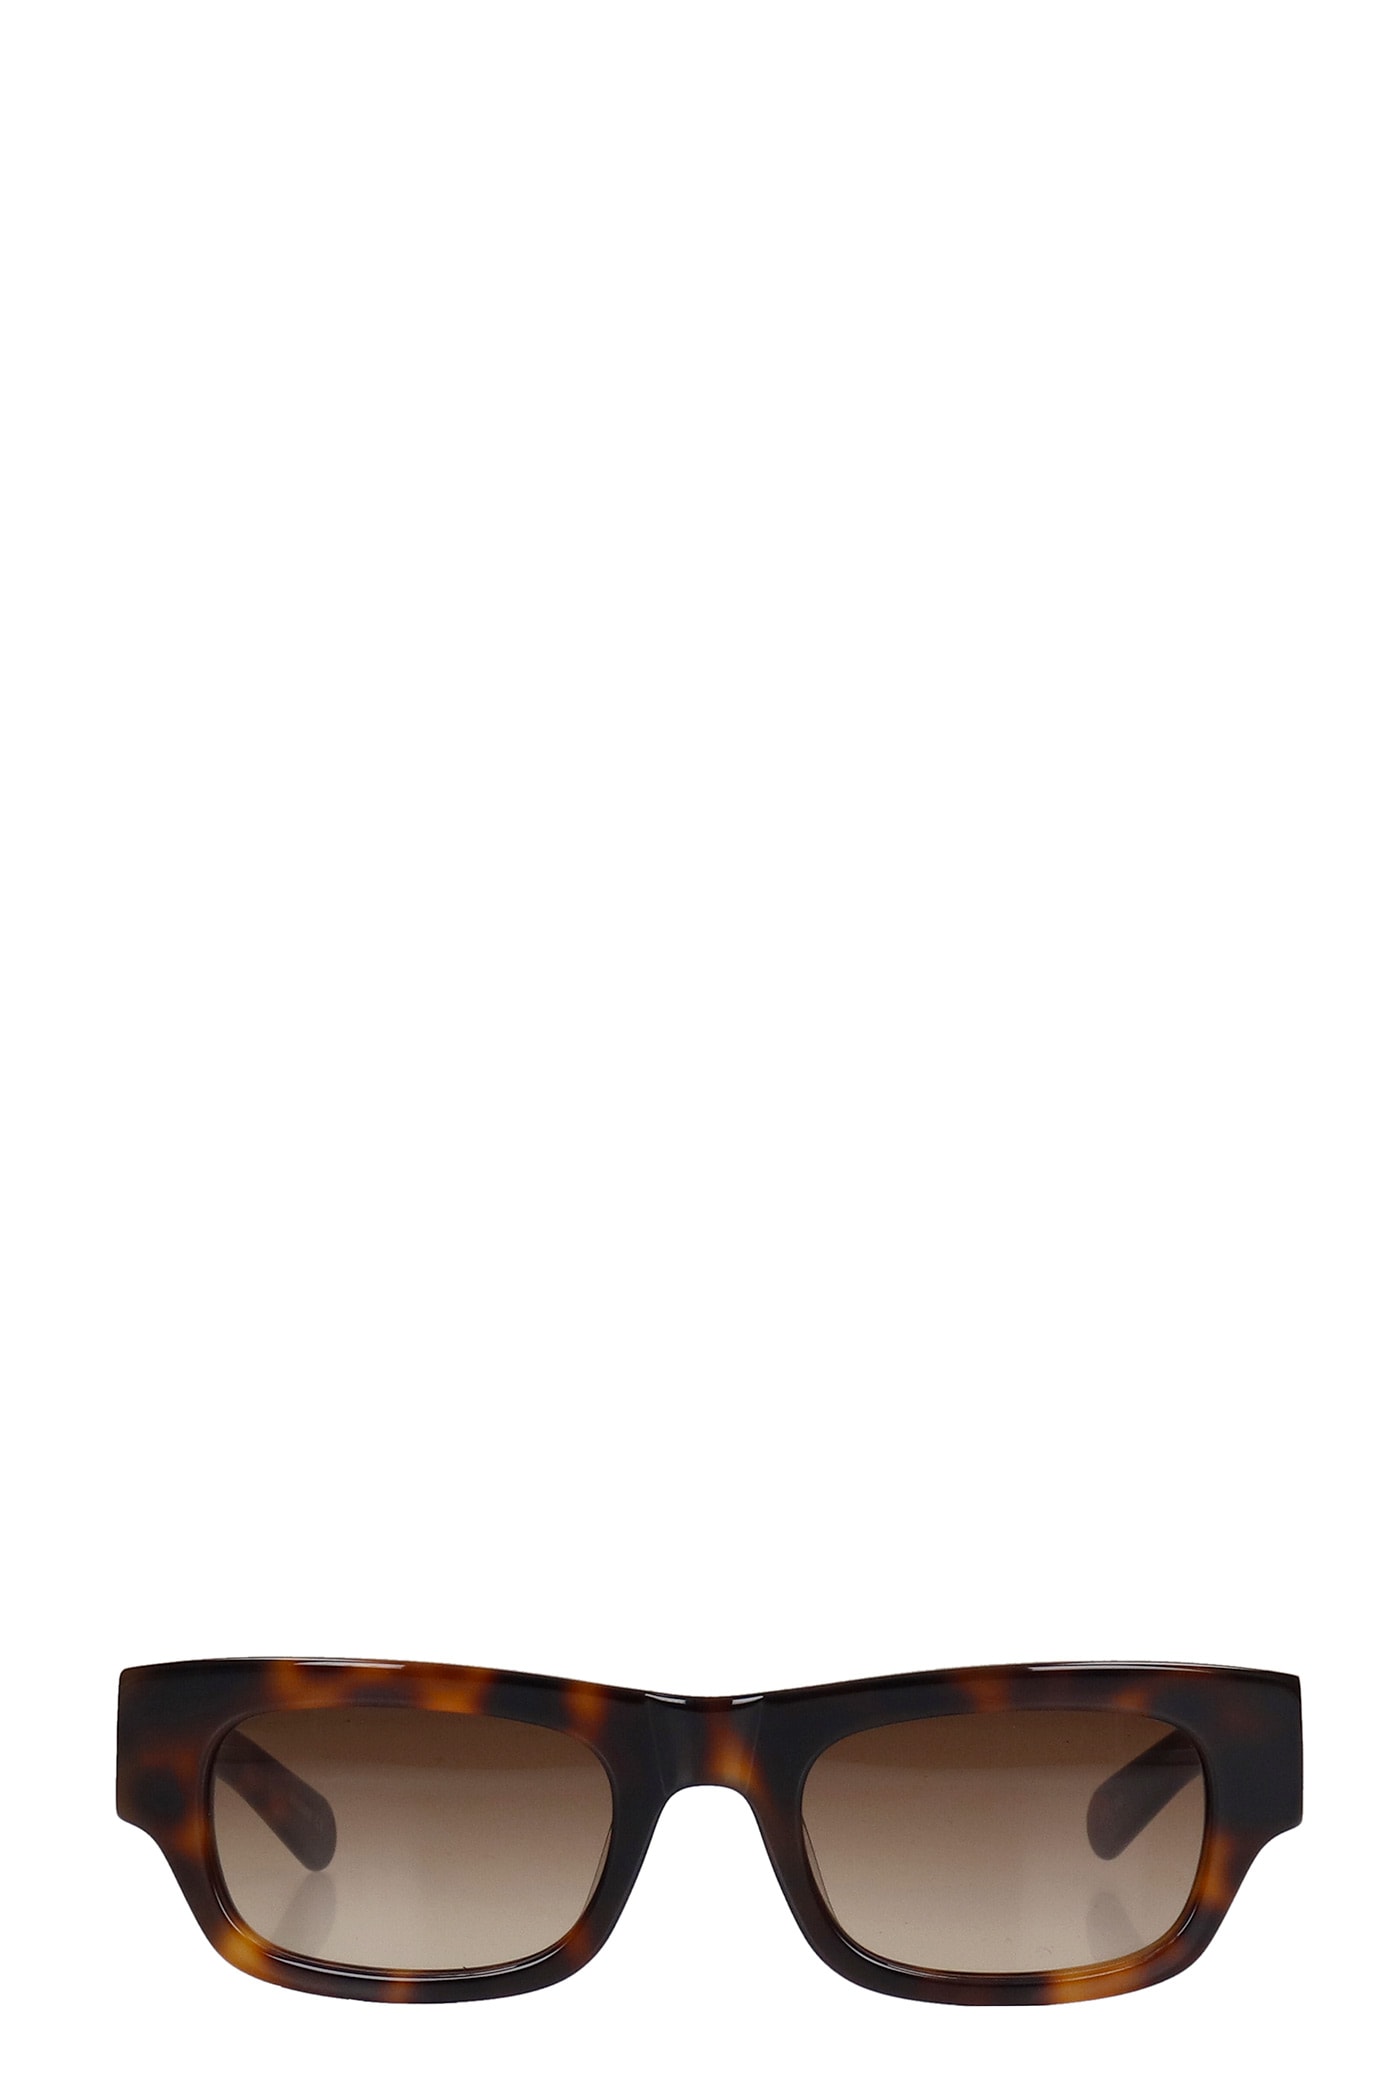 FLATLIST FRANKIE SUNGLASSES IN BROWN PVC,11905060